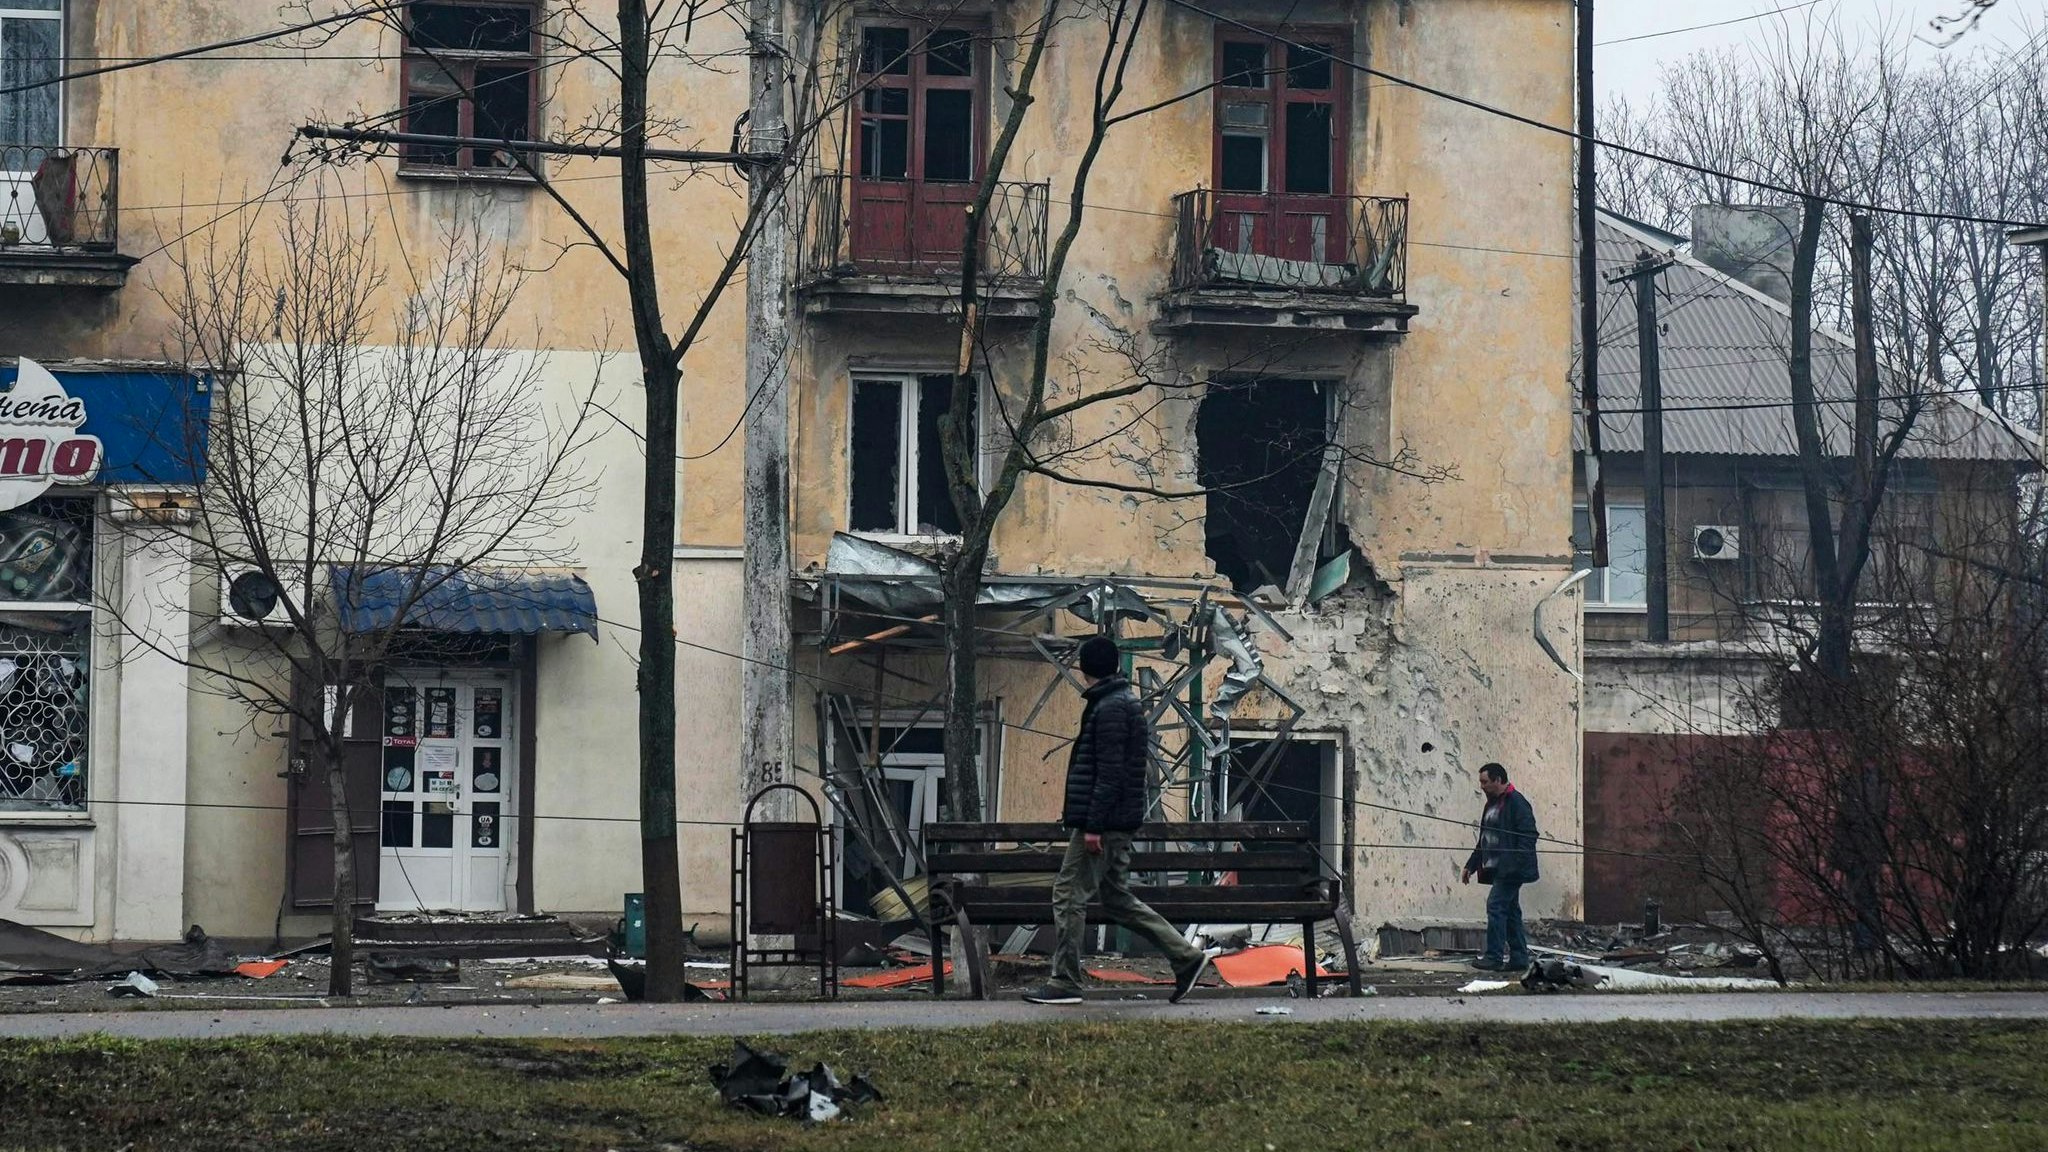 Beschossenes Haus in Mariupol. Zivilisten sollen die Stadt durch humanitäre Korridore verlassen können. Foto: dpa/Maloletka